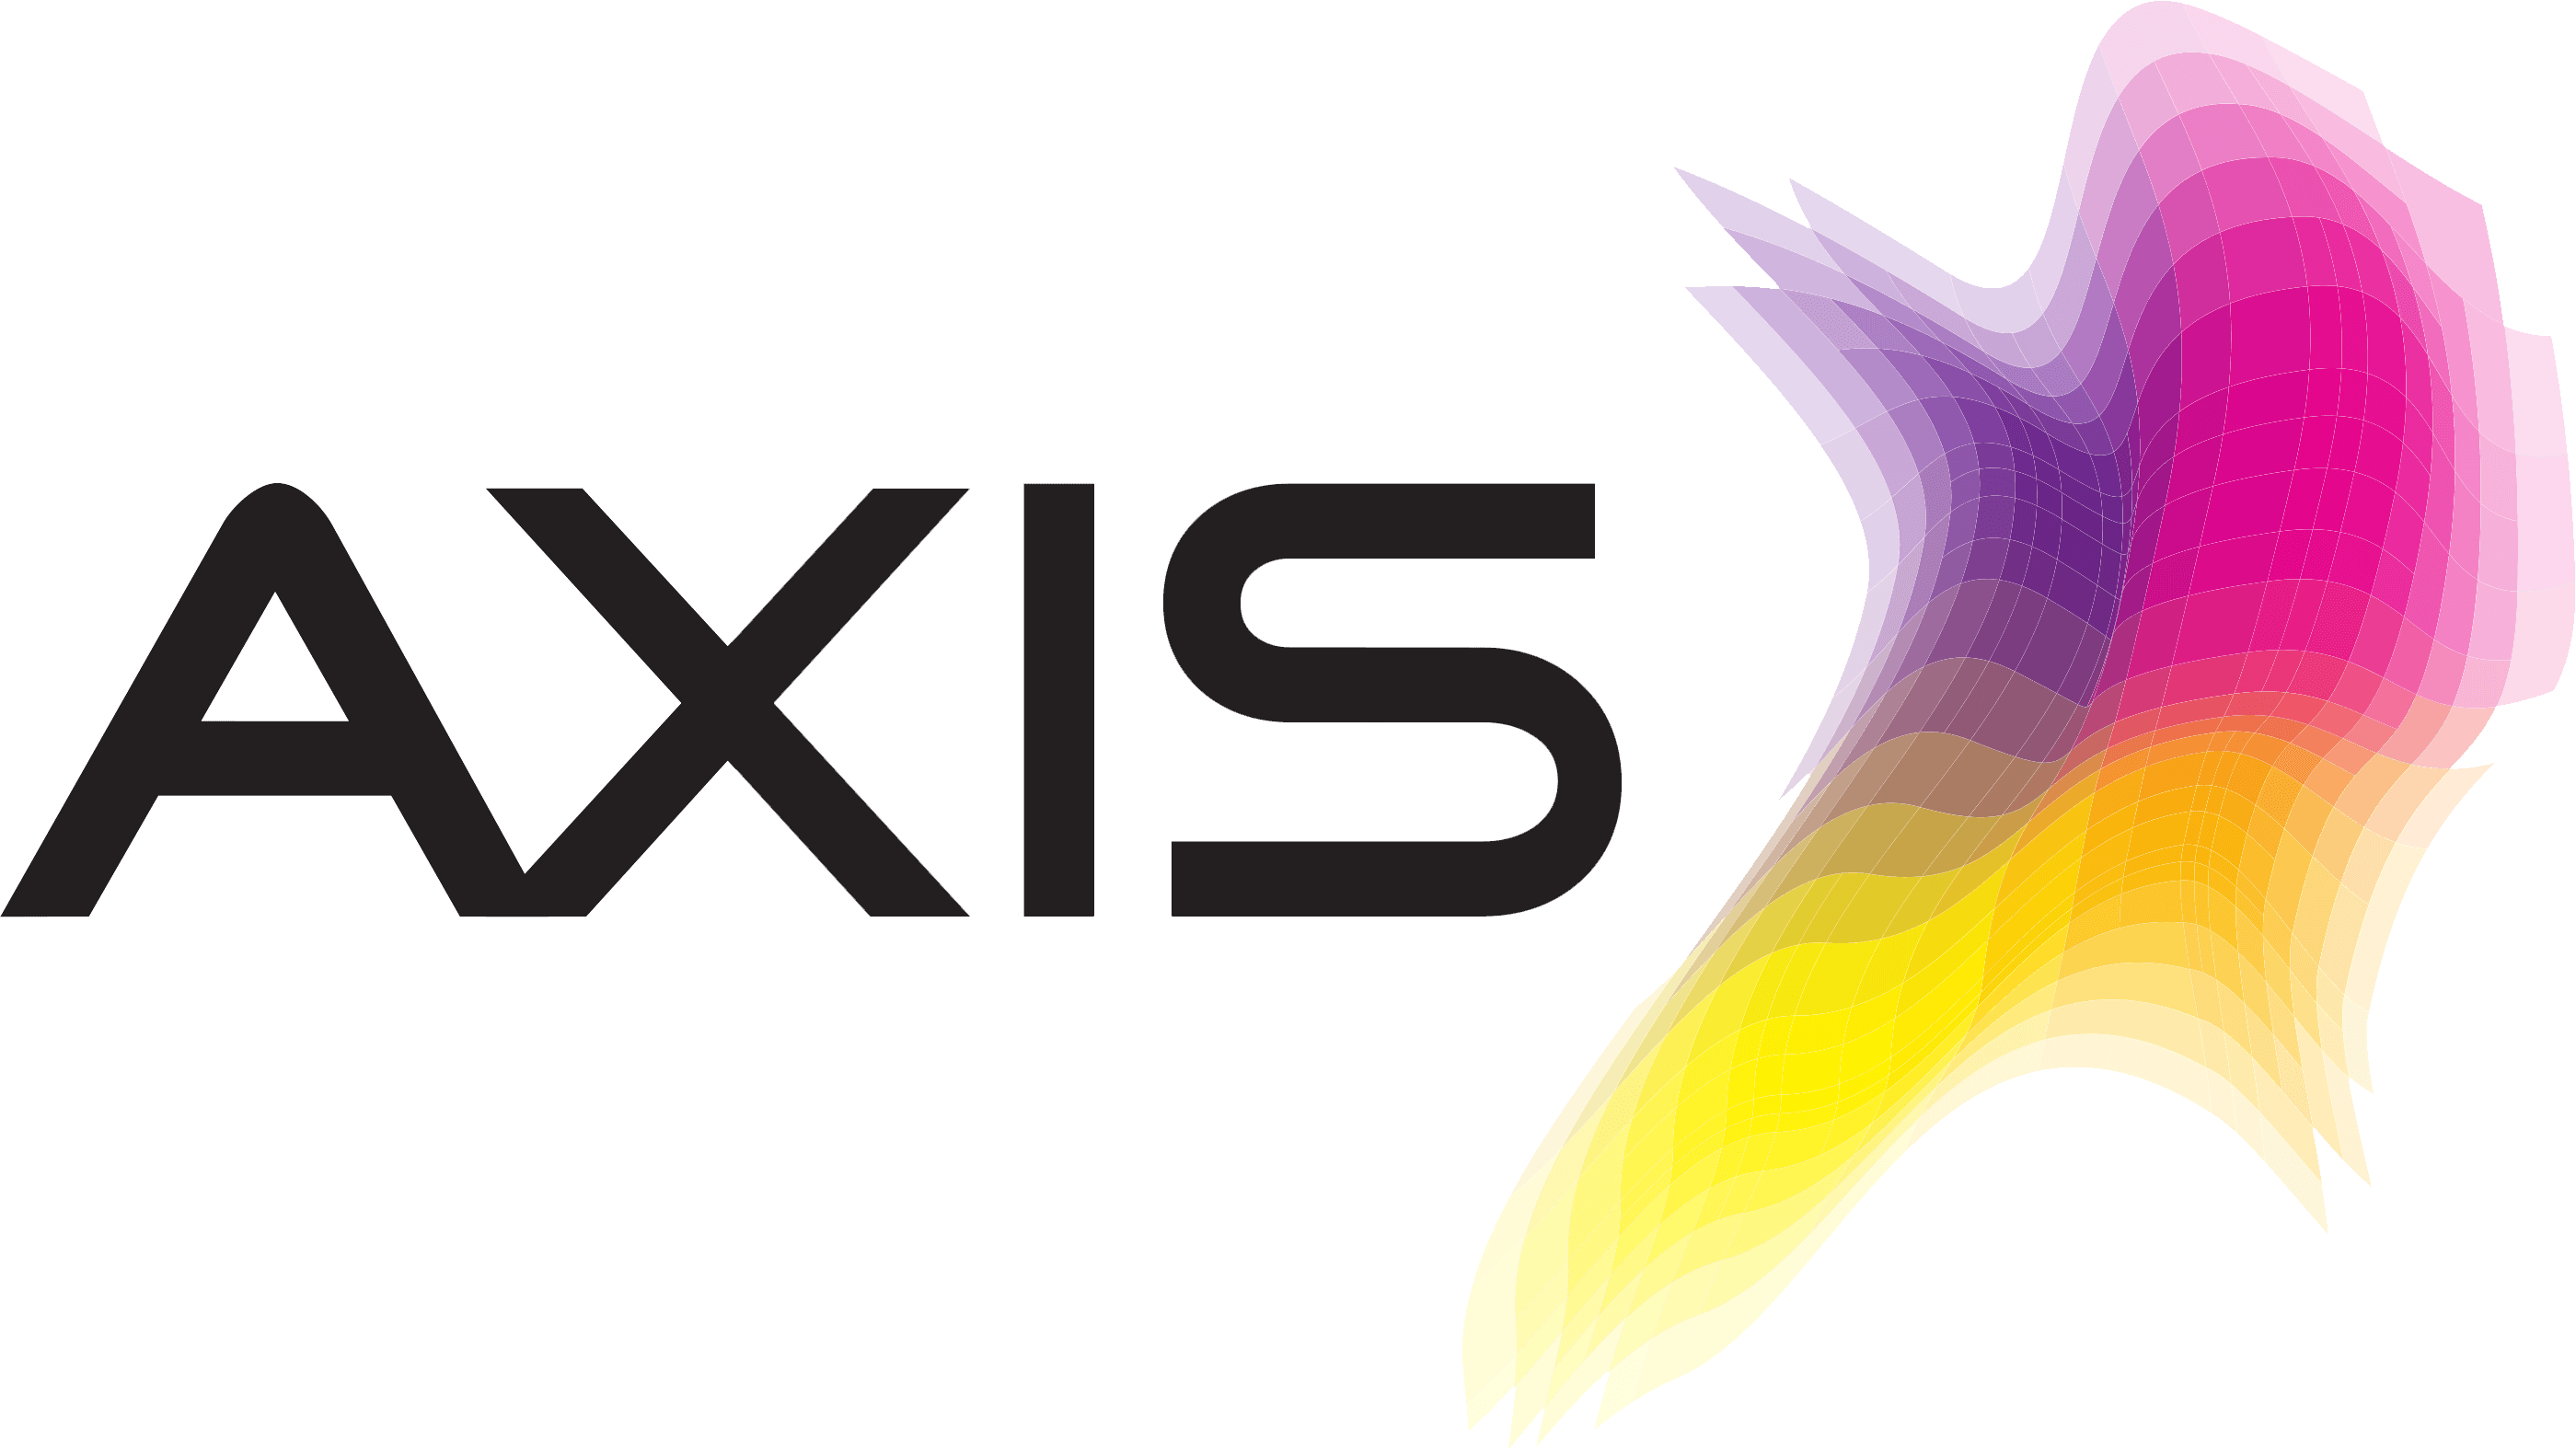 Axis Logo - Axis Telekom | Logopedia | FANDOM powered by Wikia